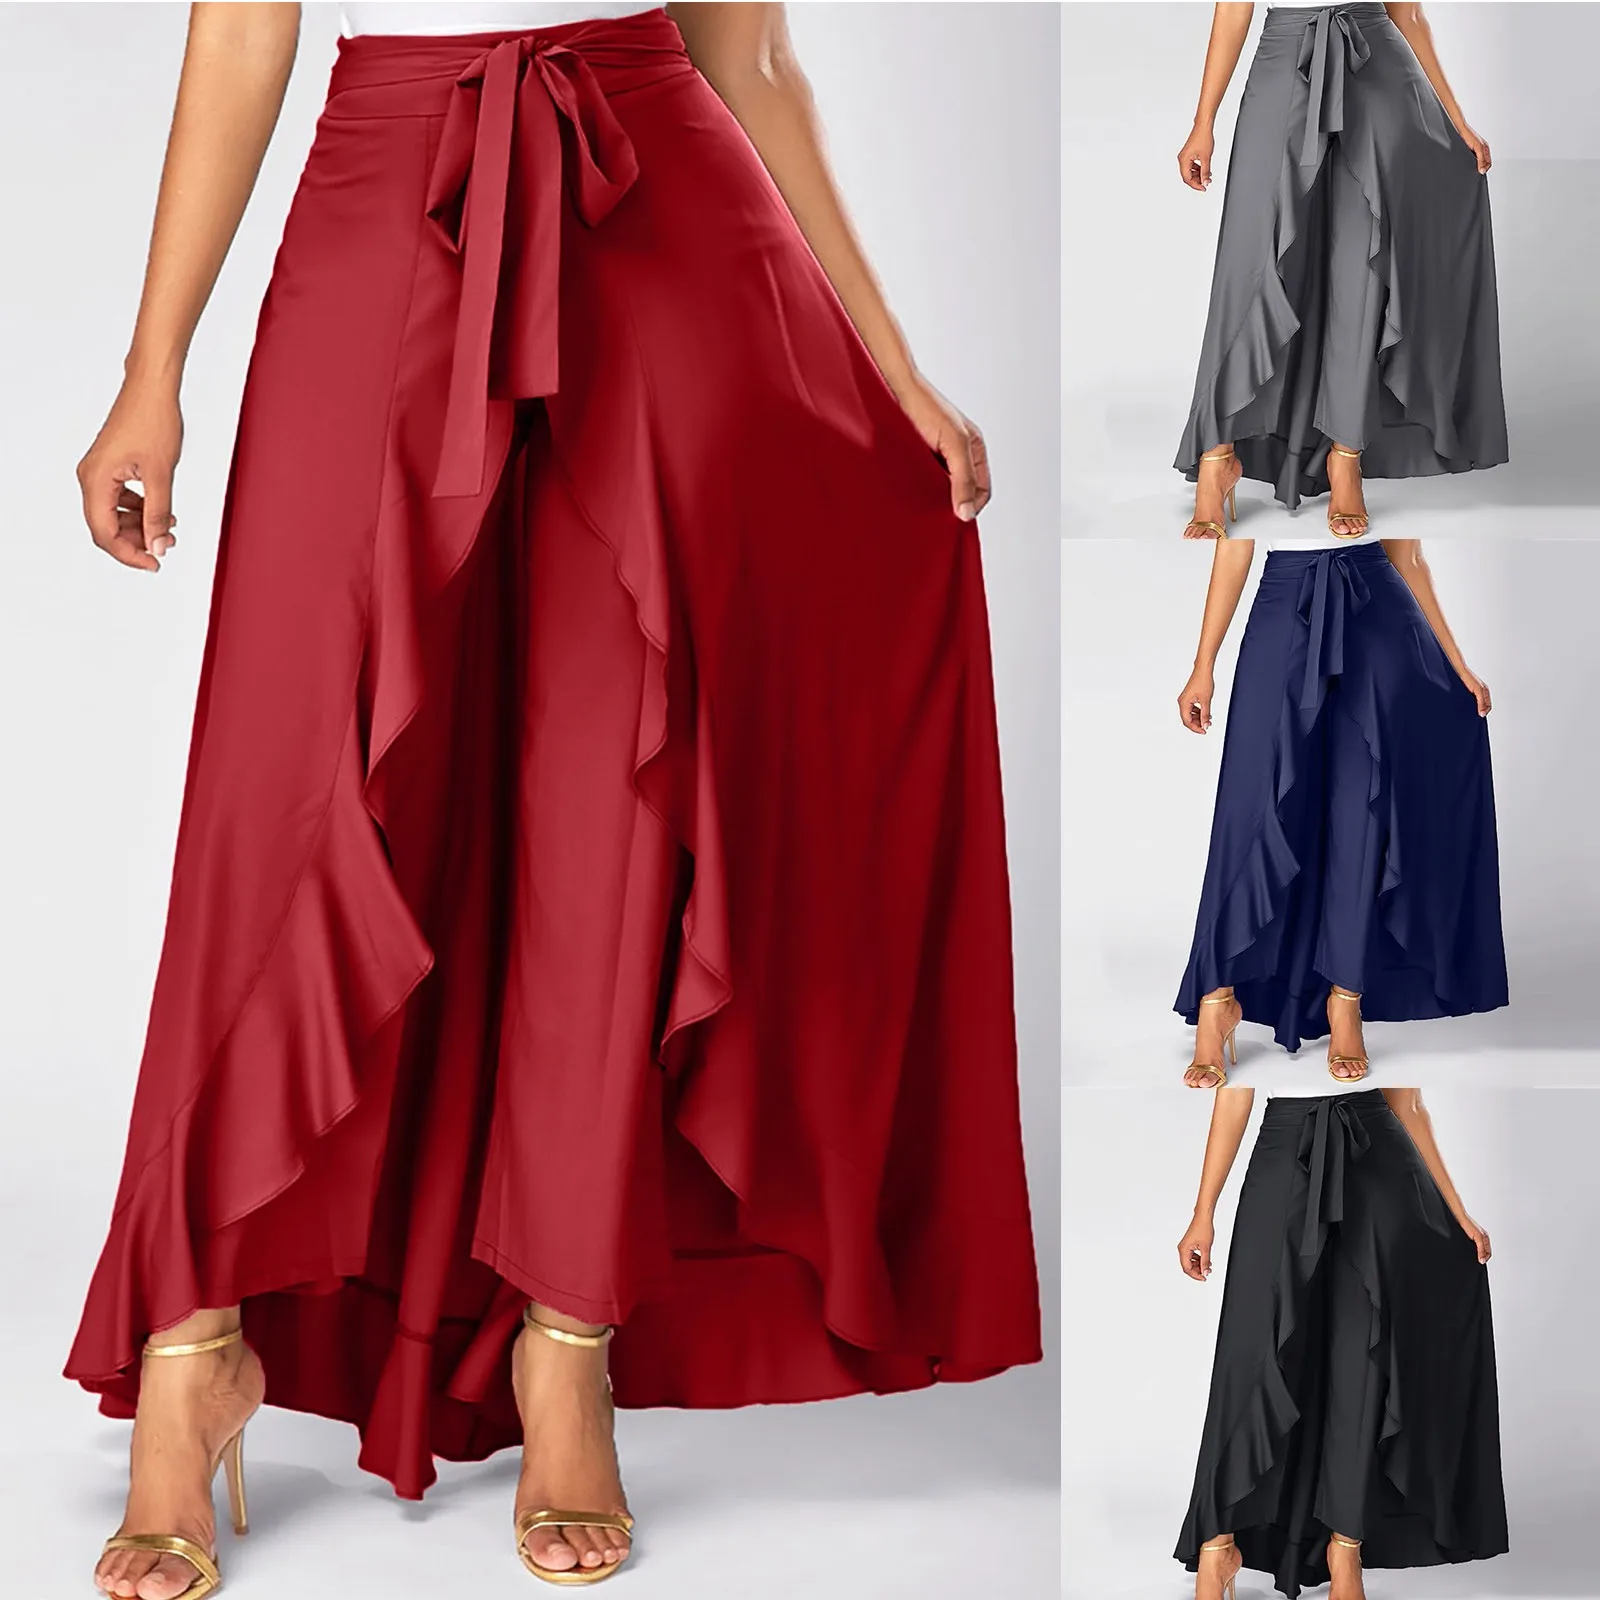 Women'S Elegant Dress Pants Women'S Fancy High Waist Lace Up Skirts Irregular Chiffon Ruffled Lace-Up Long Pants For Women